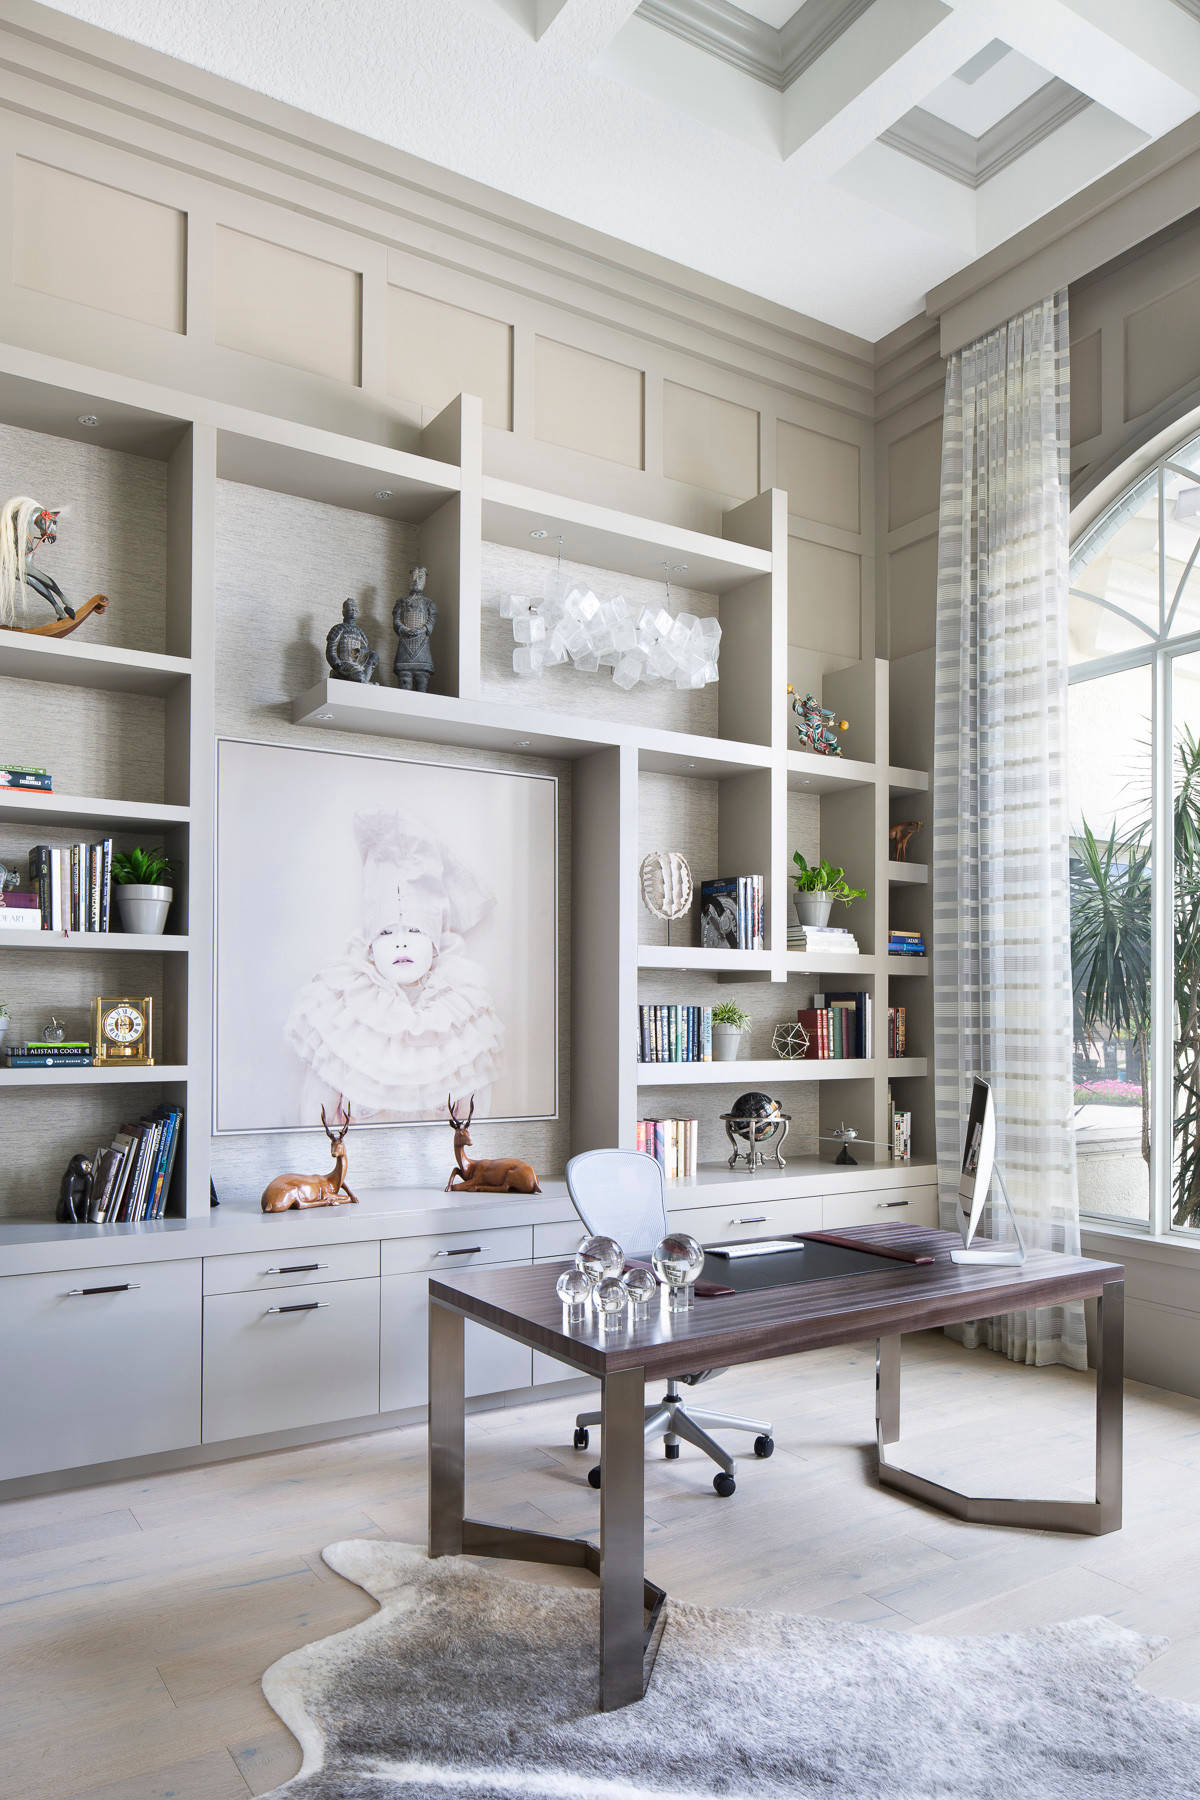 Modern & Feminine Home Office Ideas & Decor